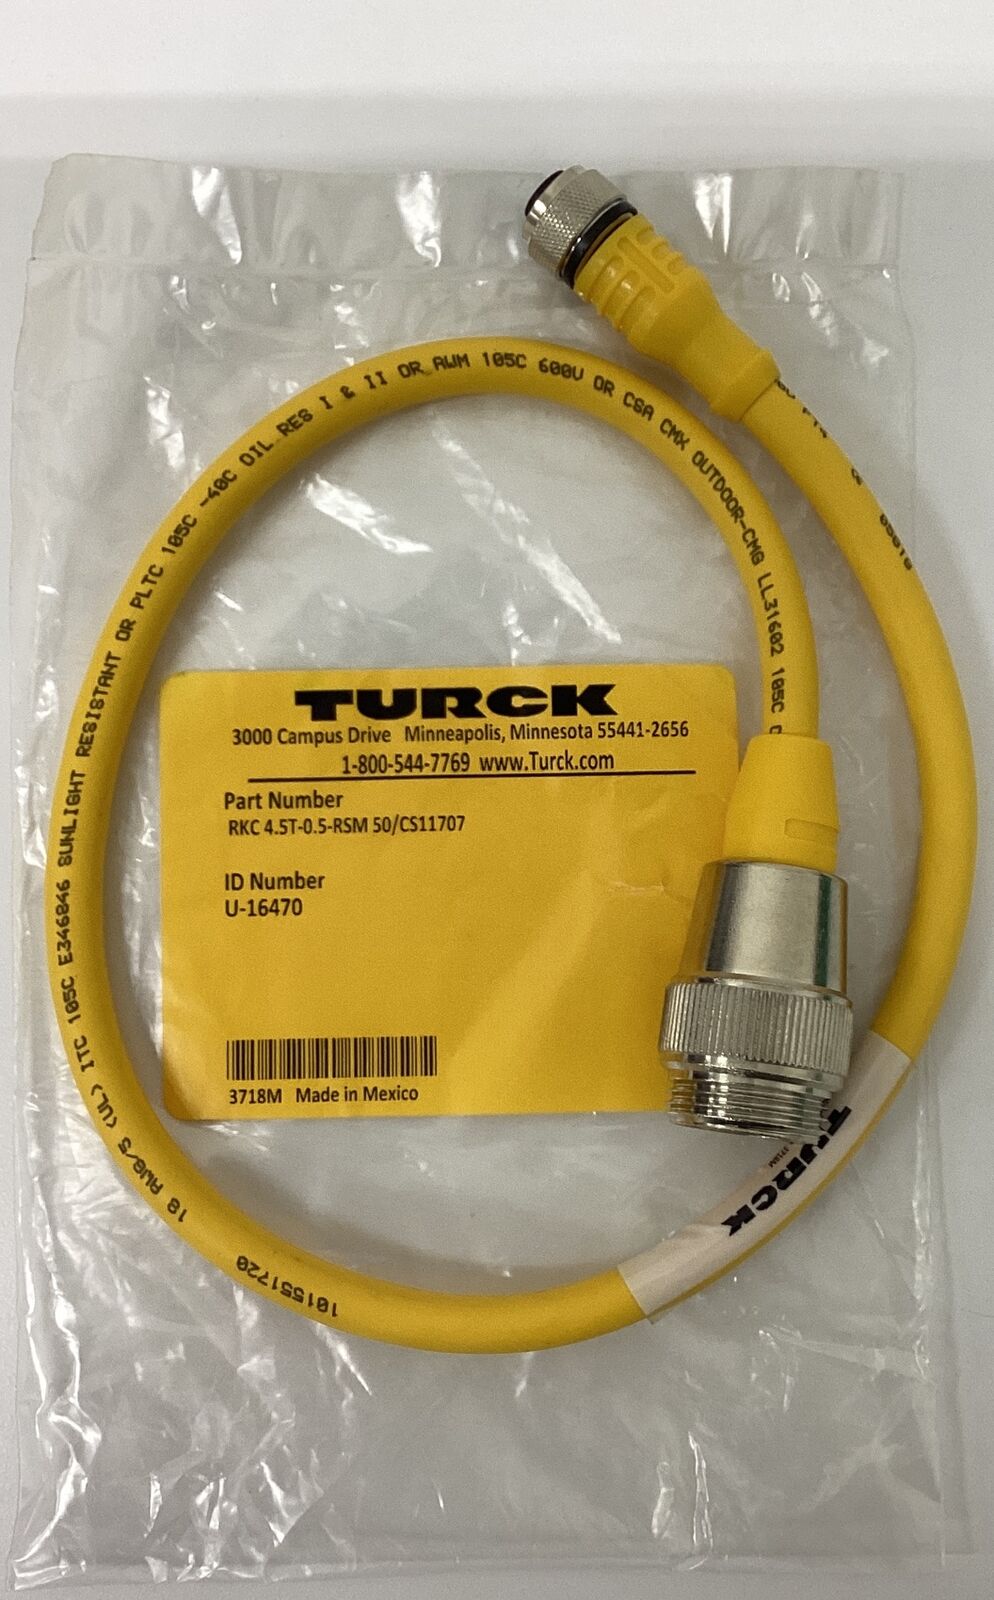 Turck RKC4.5T-0.5-RSM50/CS11707 / U-16470 Hybrid Cable (GR165) - 0